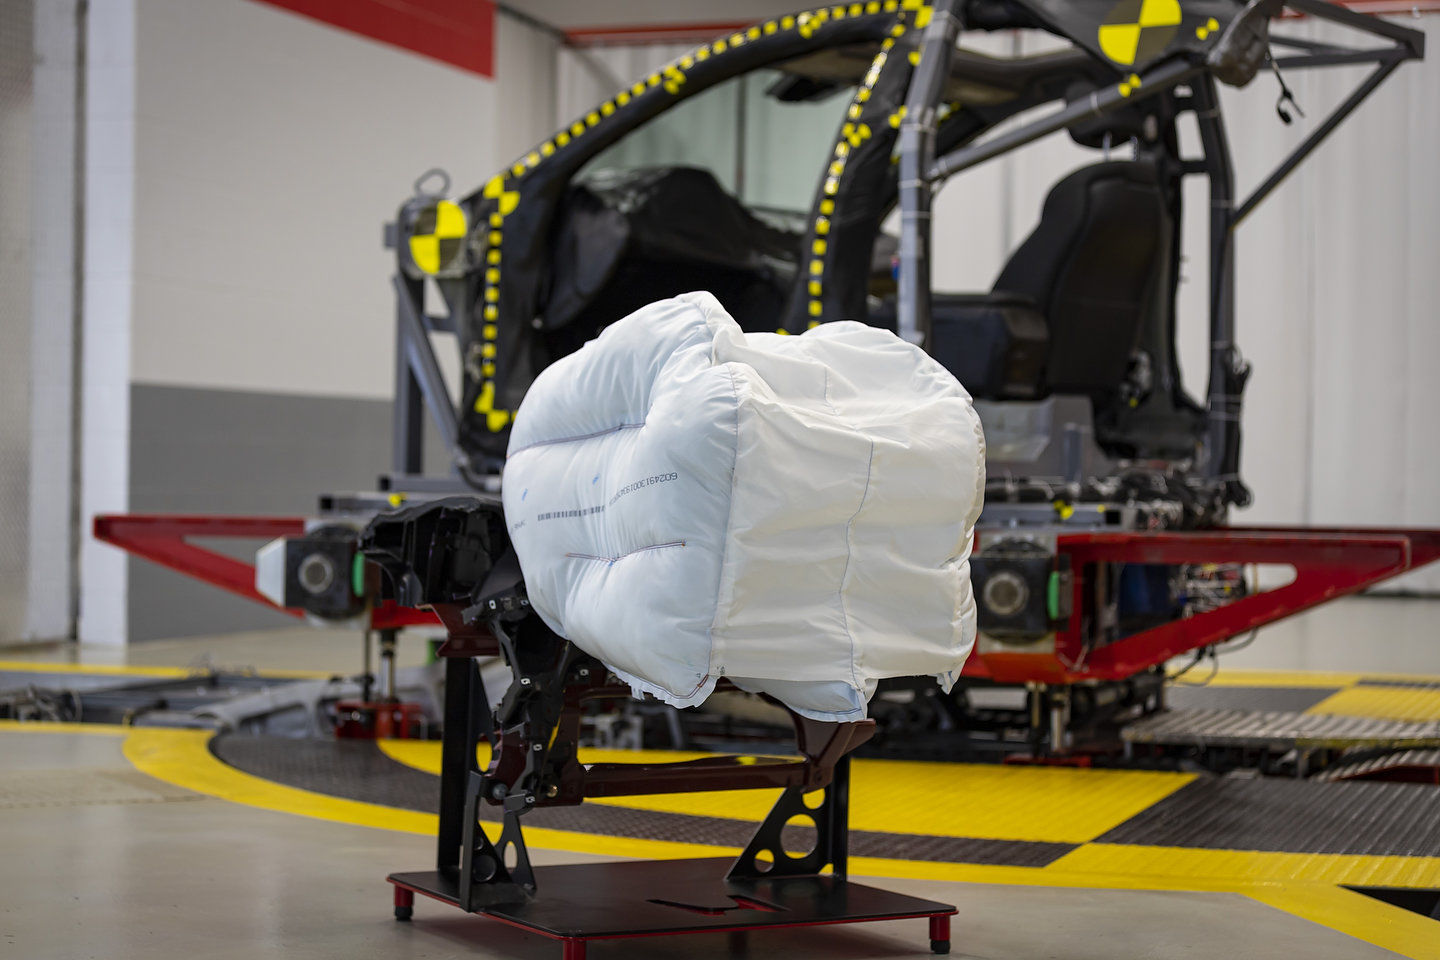 Honda introduces a new advanced airbag